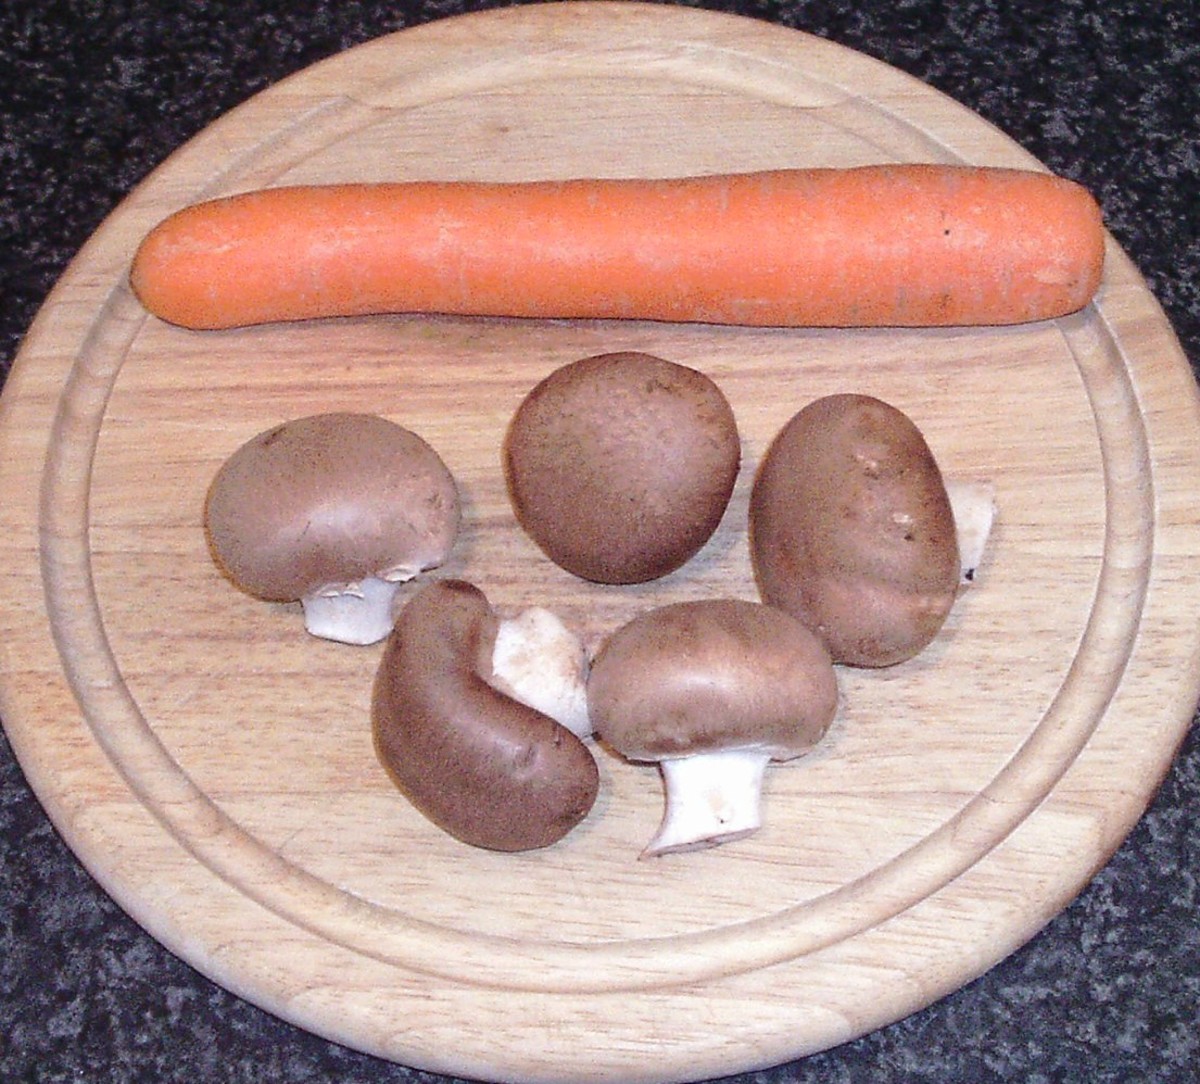 Carrot and chestnut mushrooms